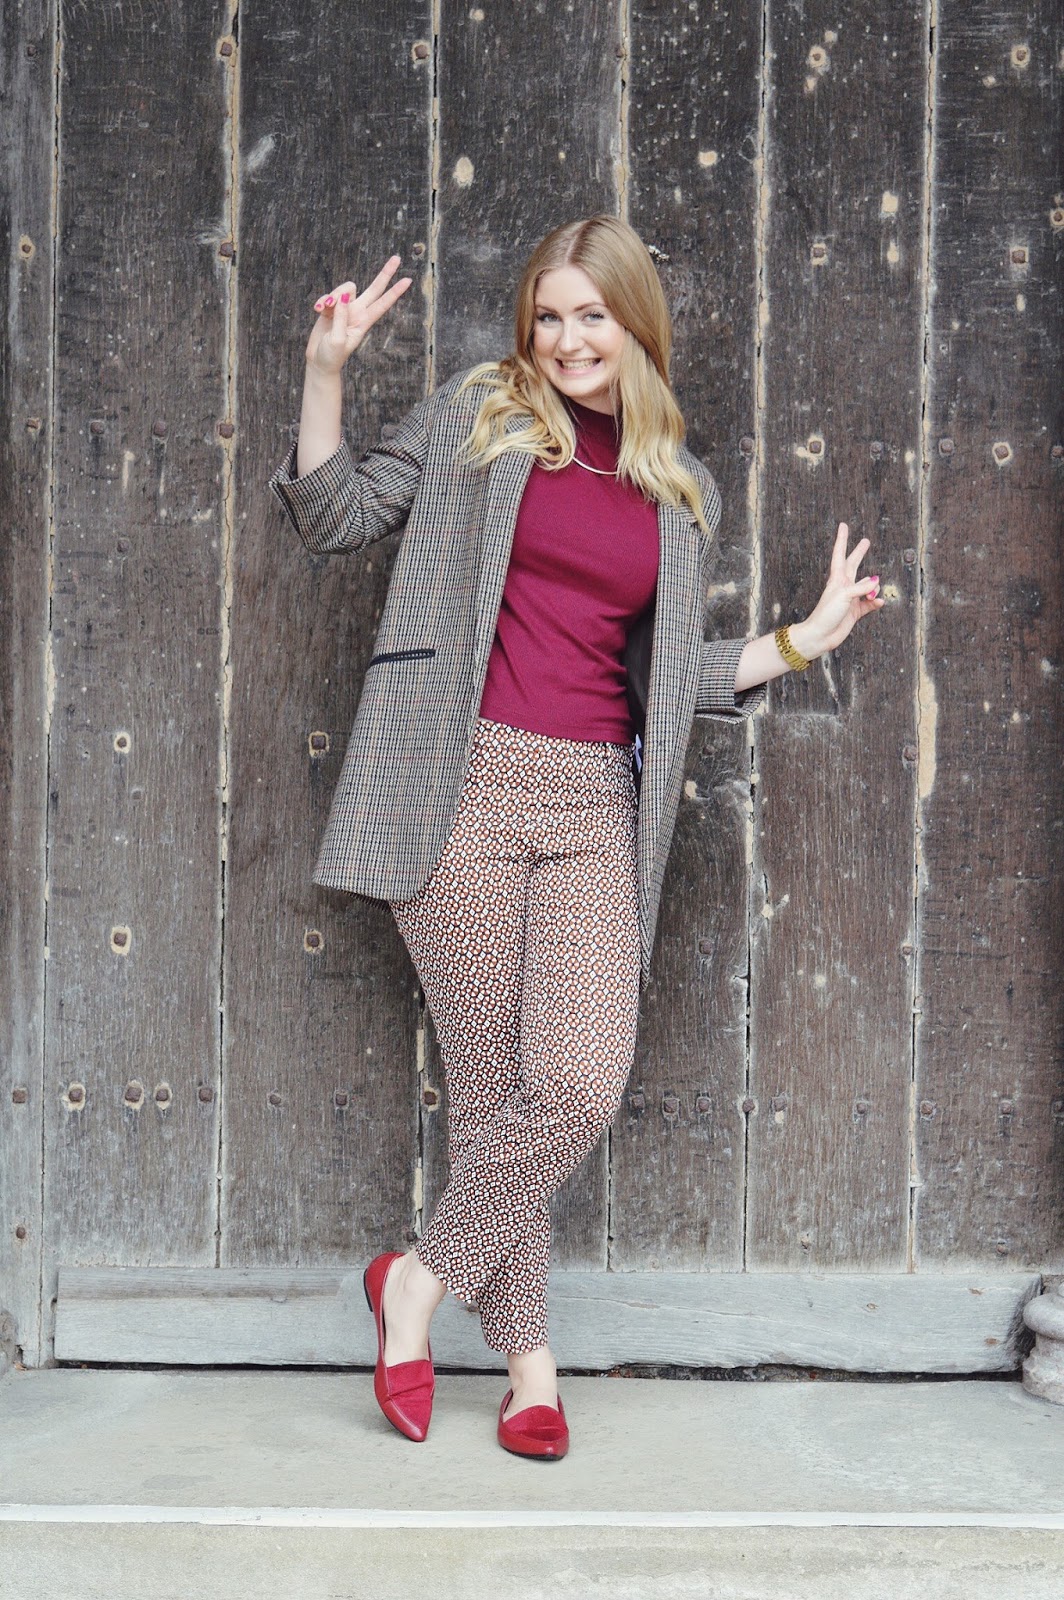 H&M printed trousers, FashionFake, fashion bloggers, Autumn fashion lookbook